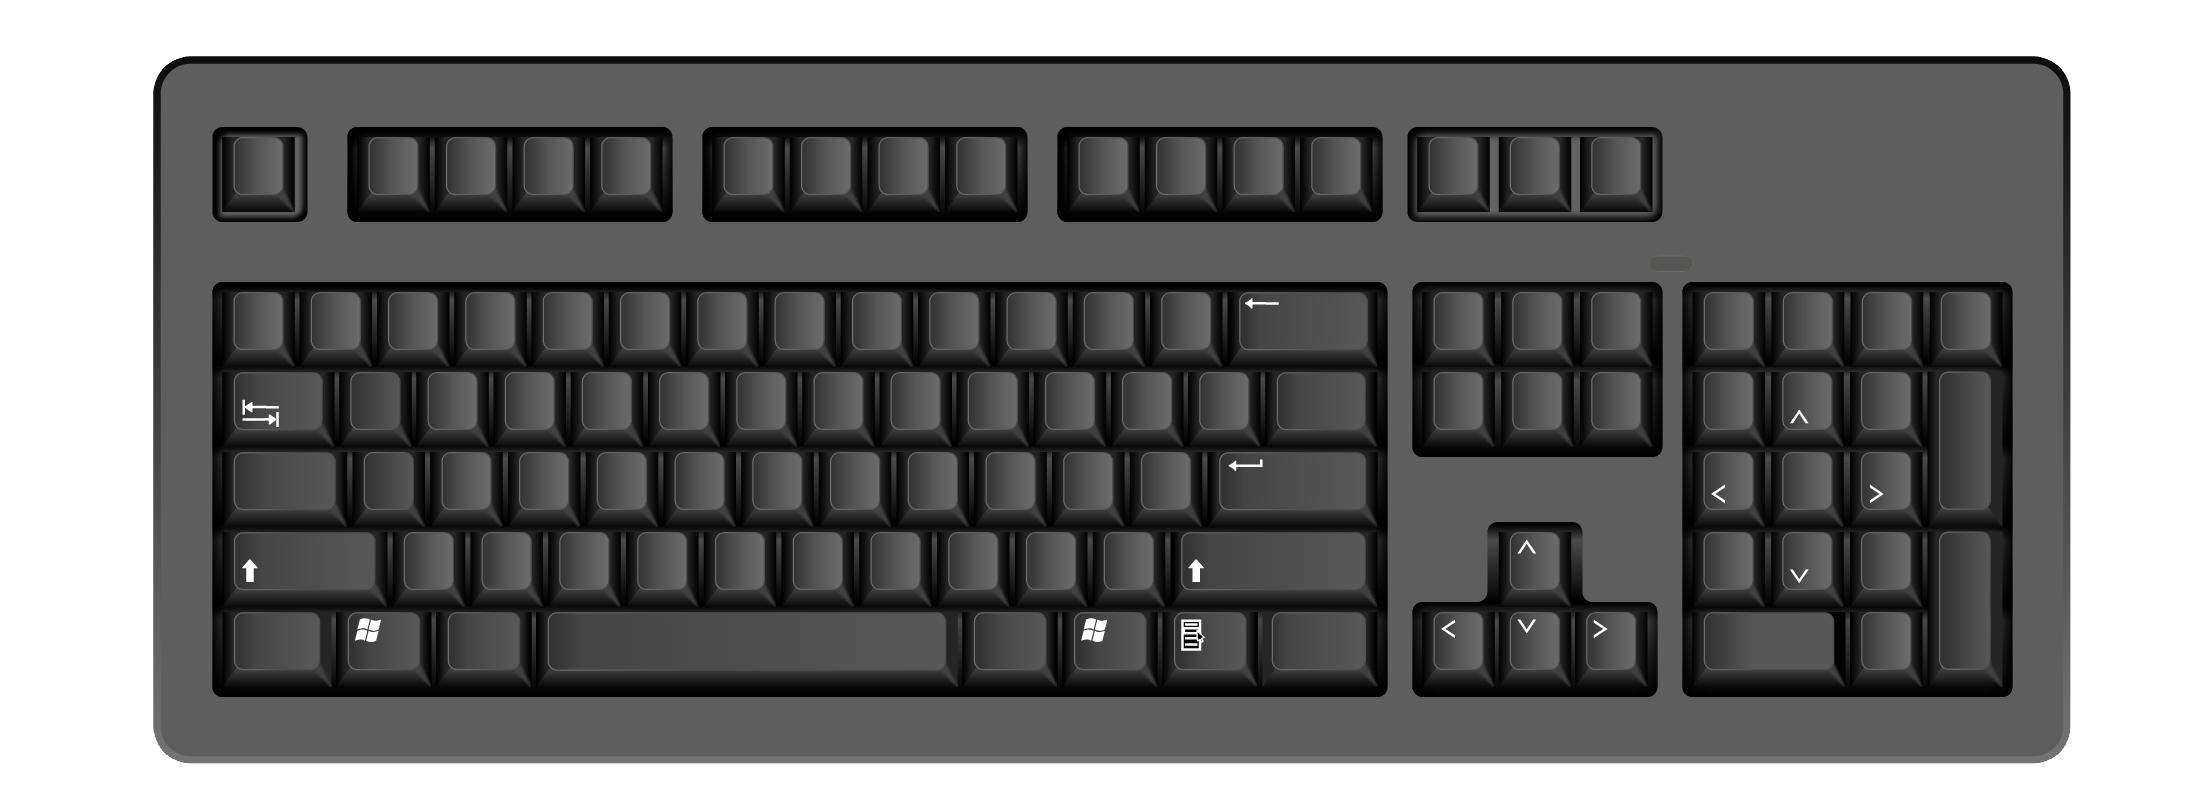 Компьютер backspace. Клавиша Numpad 1. Numpad 1 на клавиатуре. Контрол шифт на клавиатуре. Numpad 5 на клавиатуре.